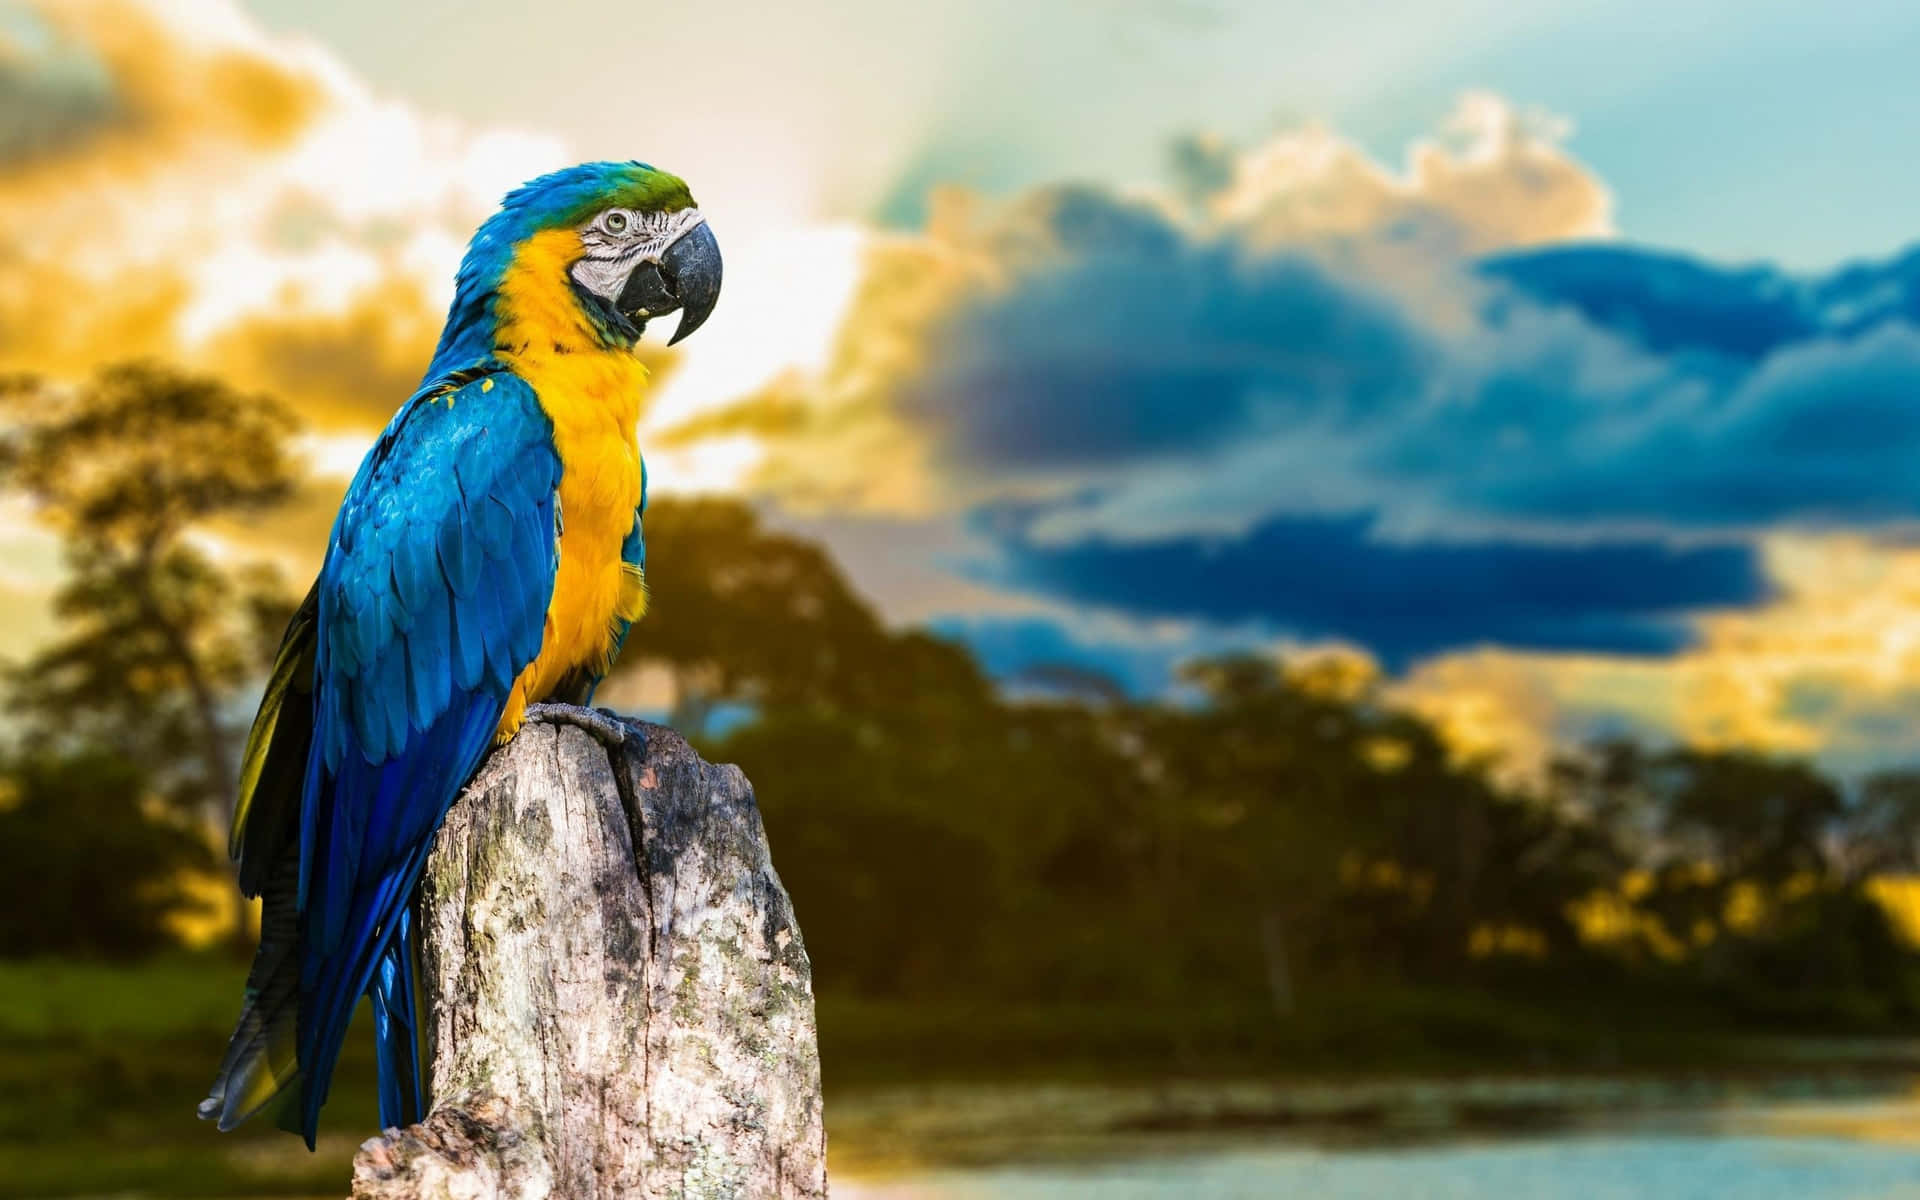 Blueand Yellow Macaw Perchedat Sunset Wallpaper